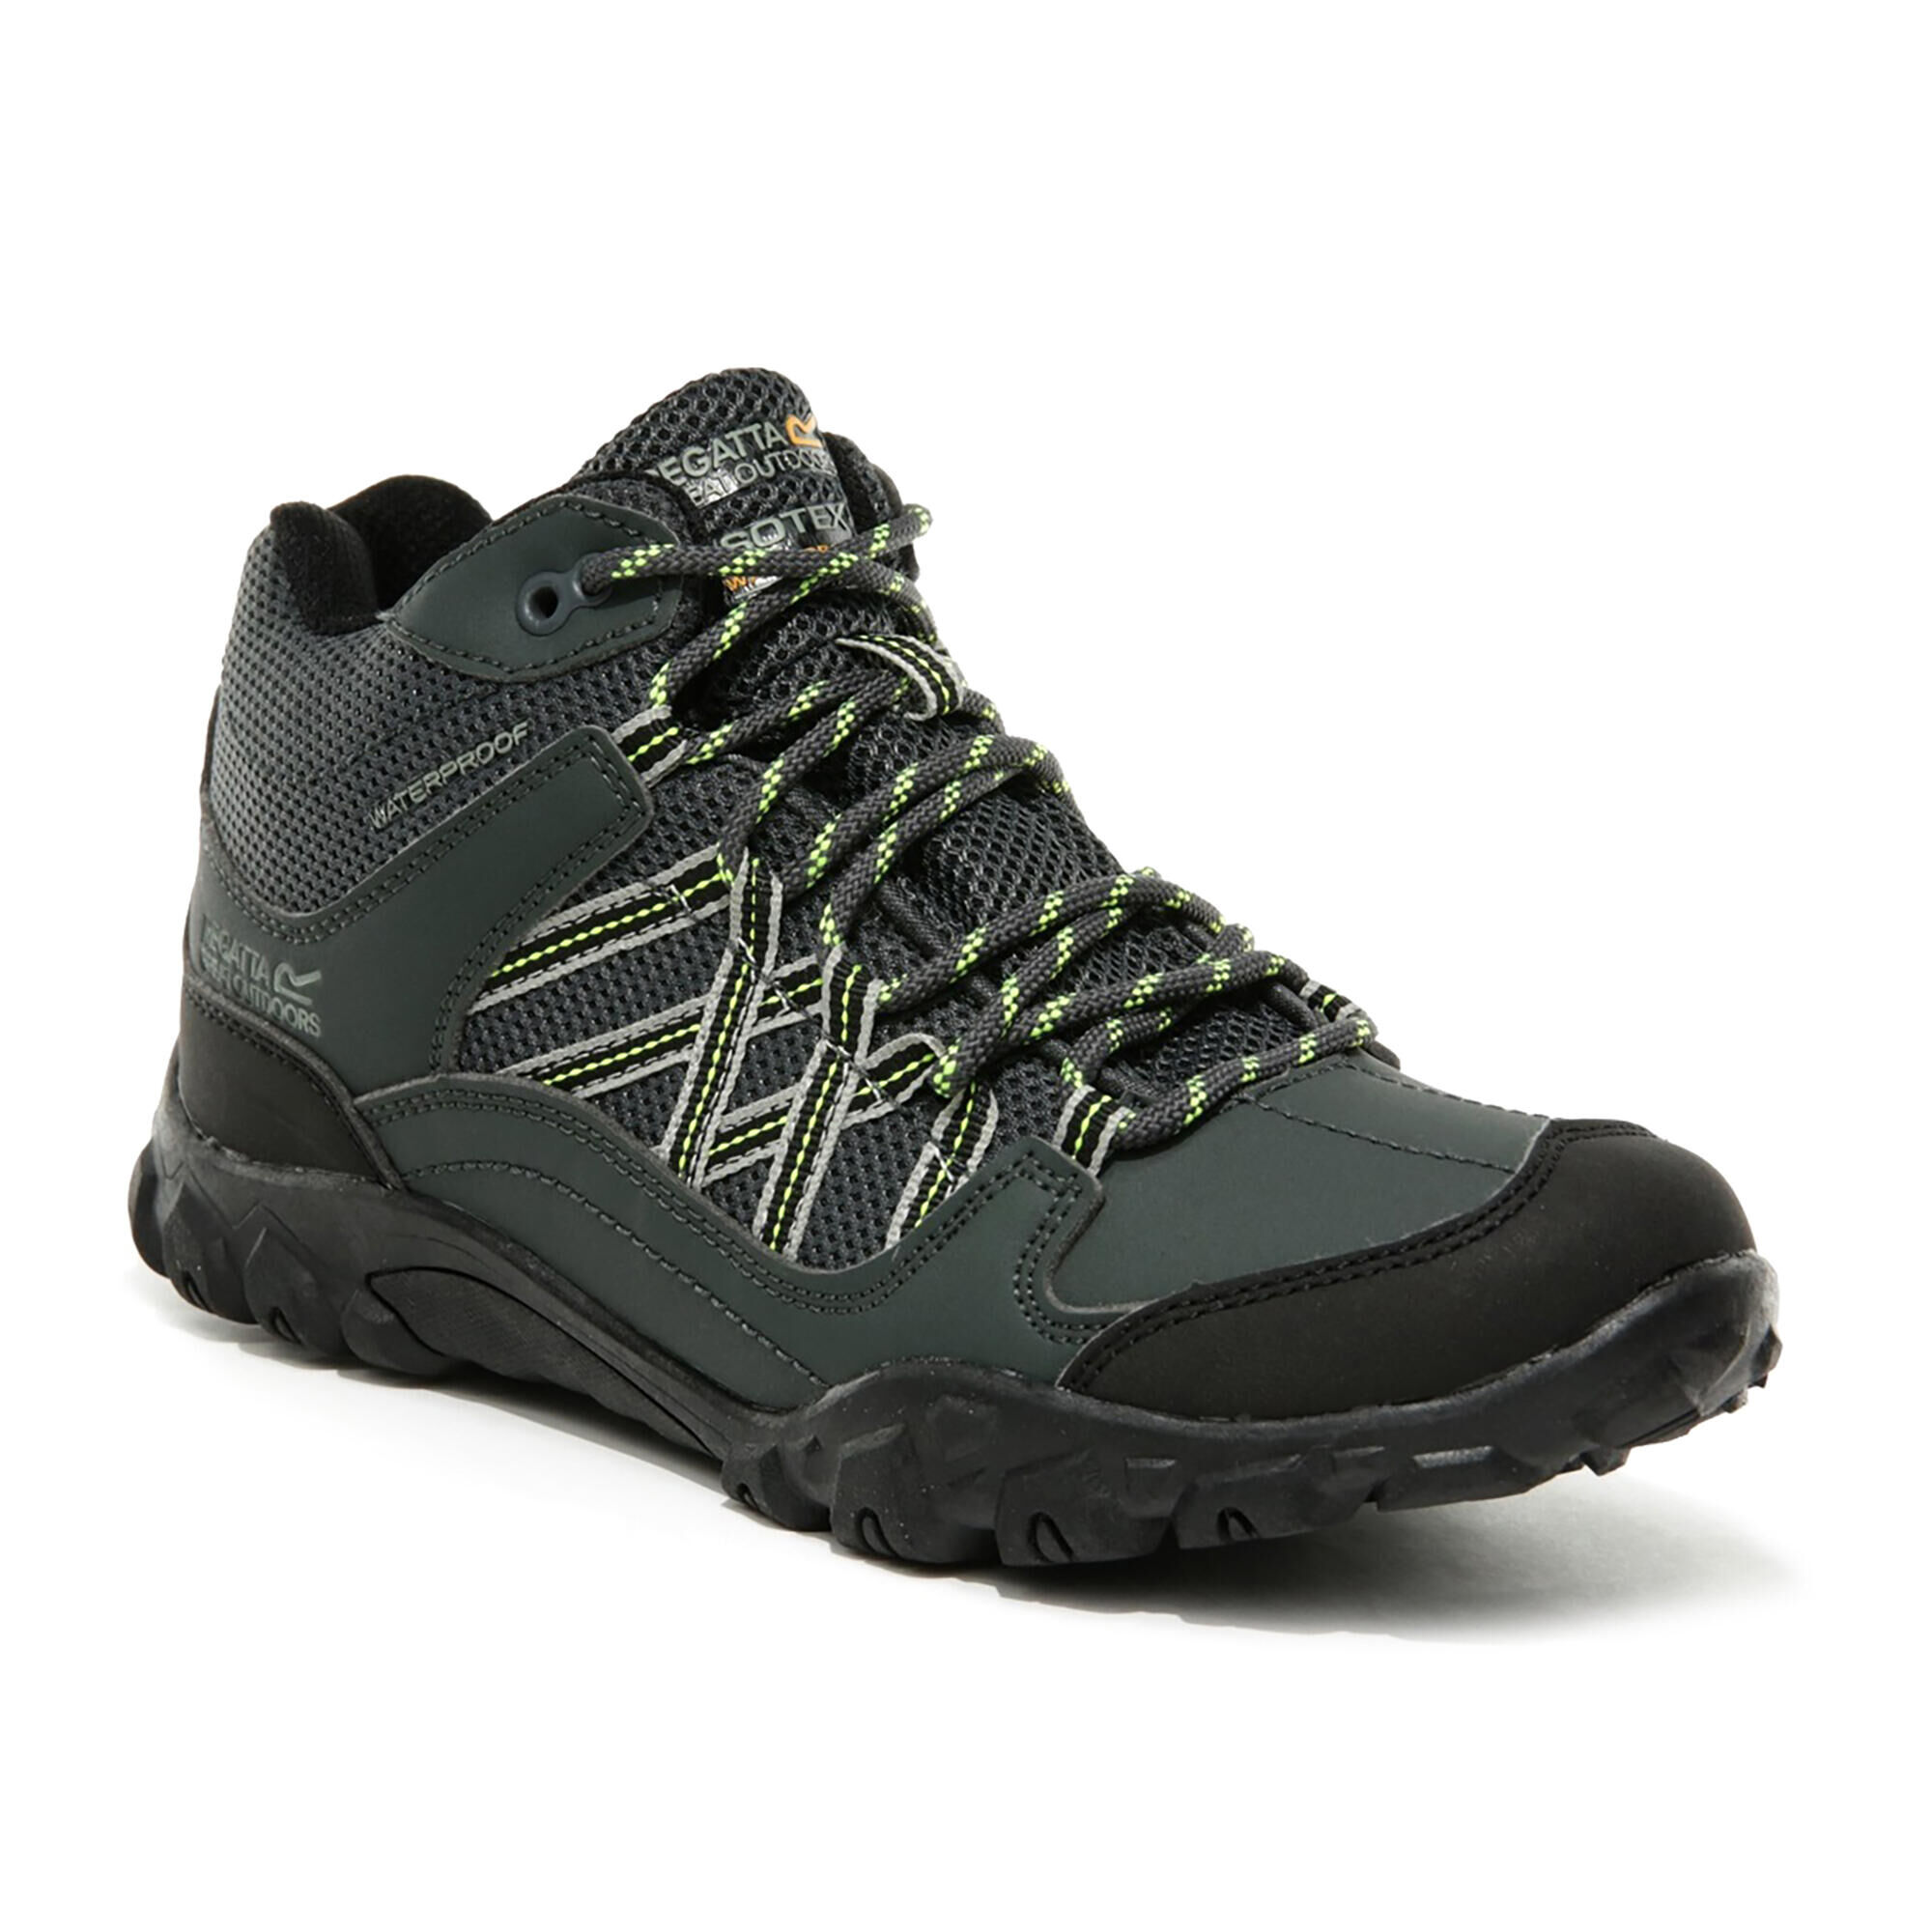 REGATTA Edgepoint Kids' Hiking Waterproof Mid Boots - Grey/Light Green